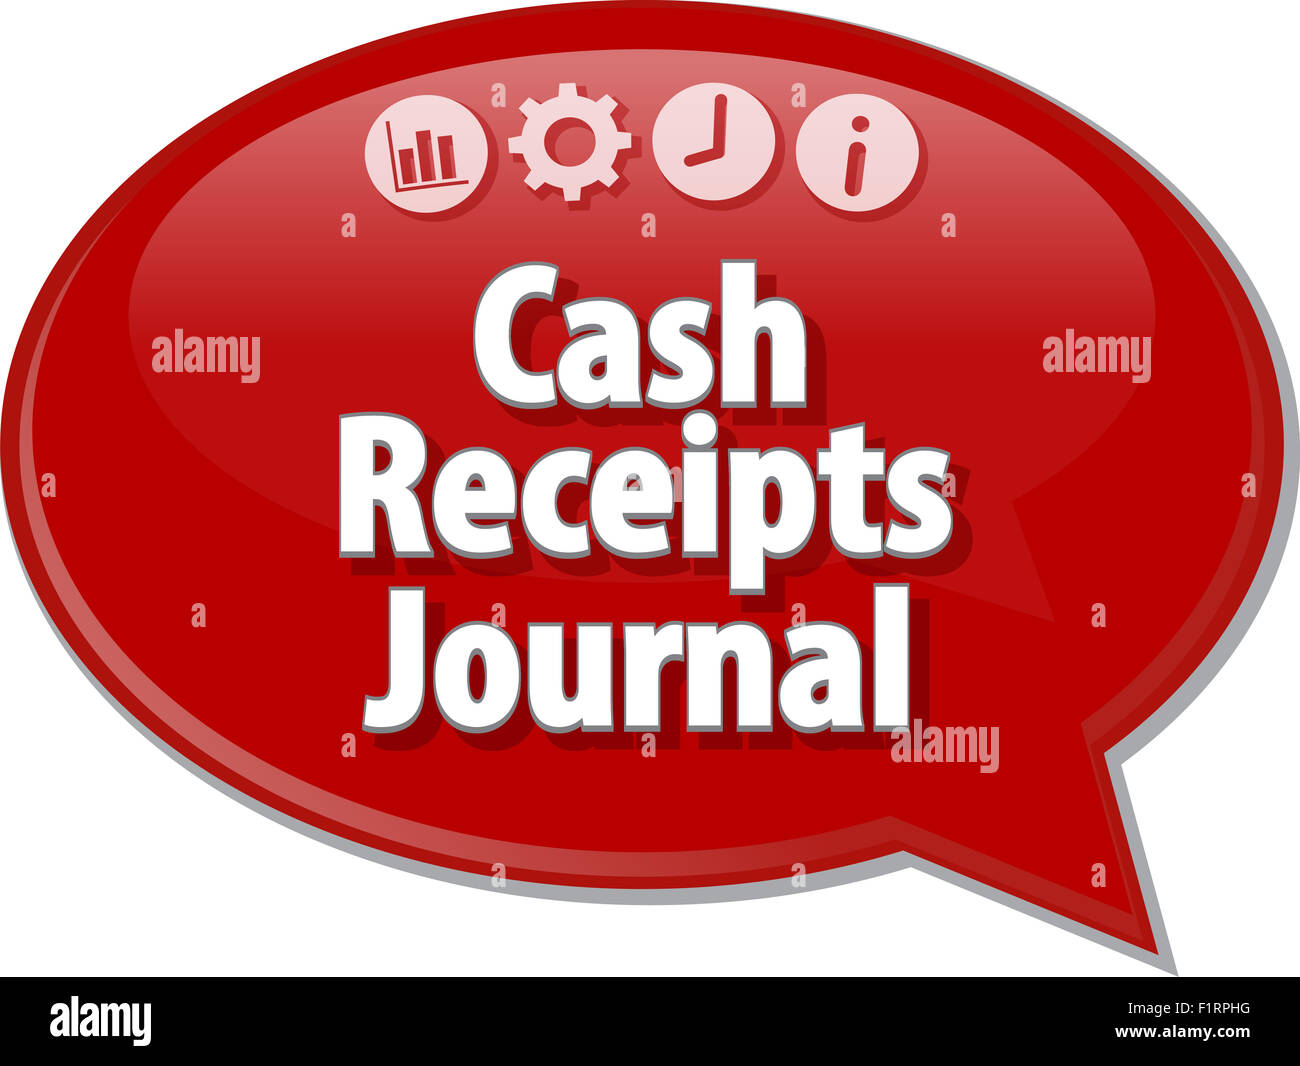 Speech bubble dialog illustration of business term saying Cash Receipts Journal Stock Photo